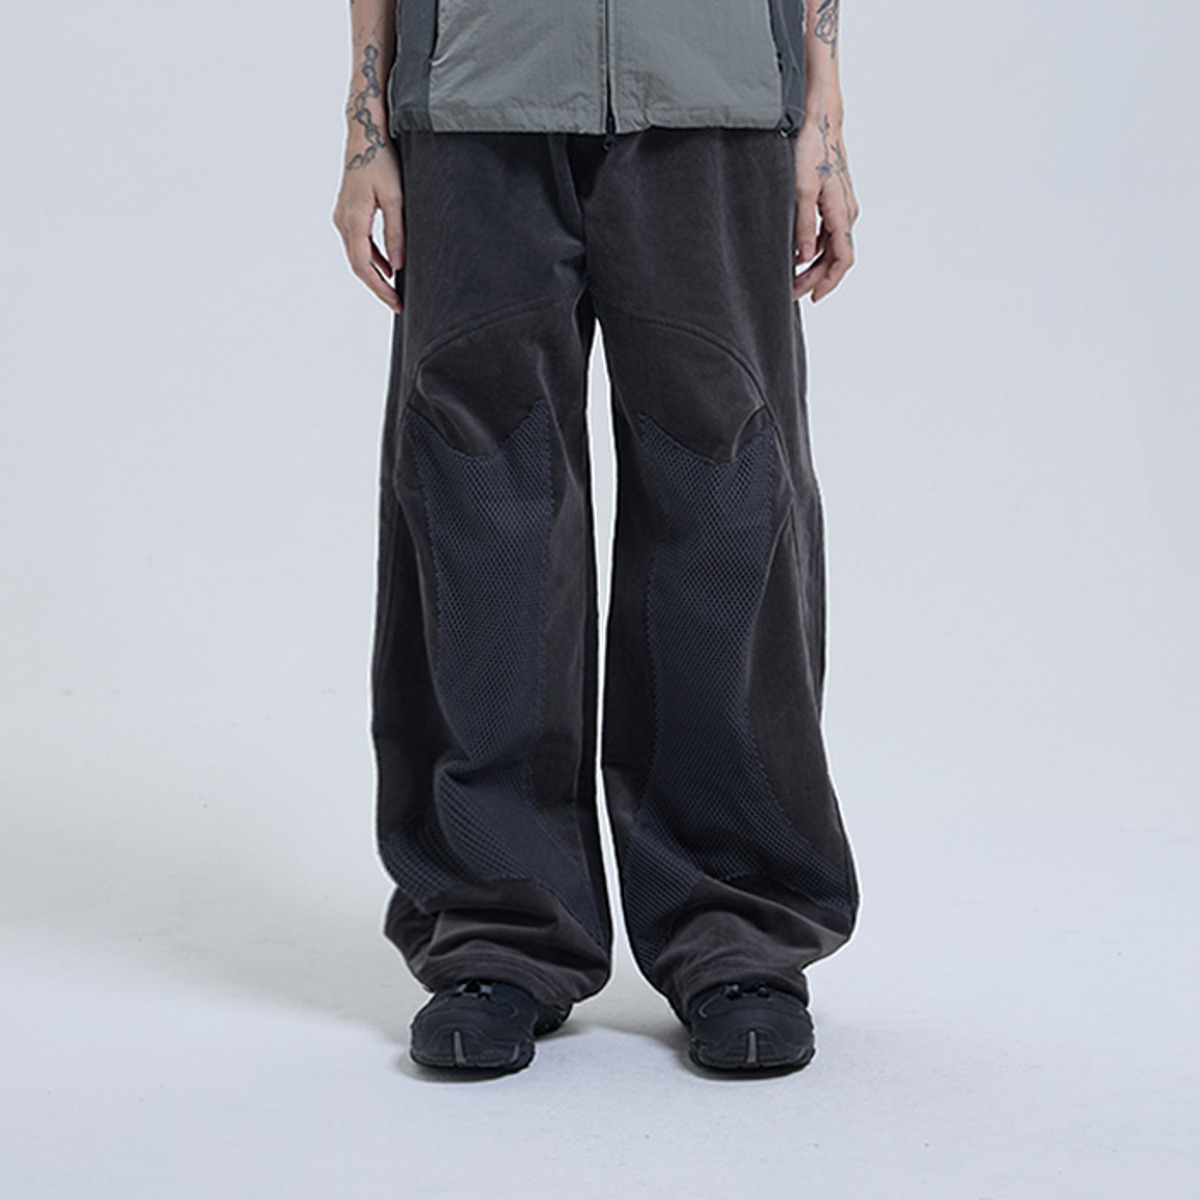 TCM corduroy mesh pants (charcoal) (10/27 예약배송)